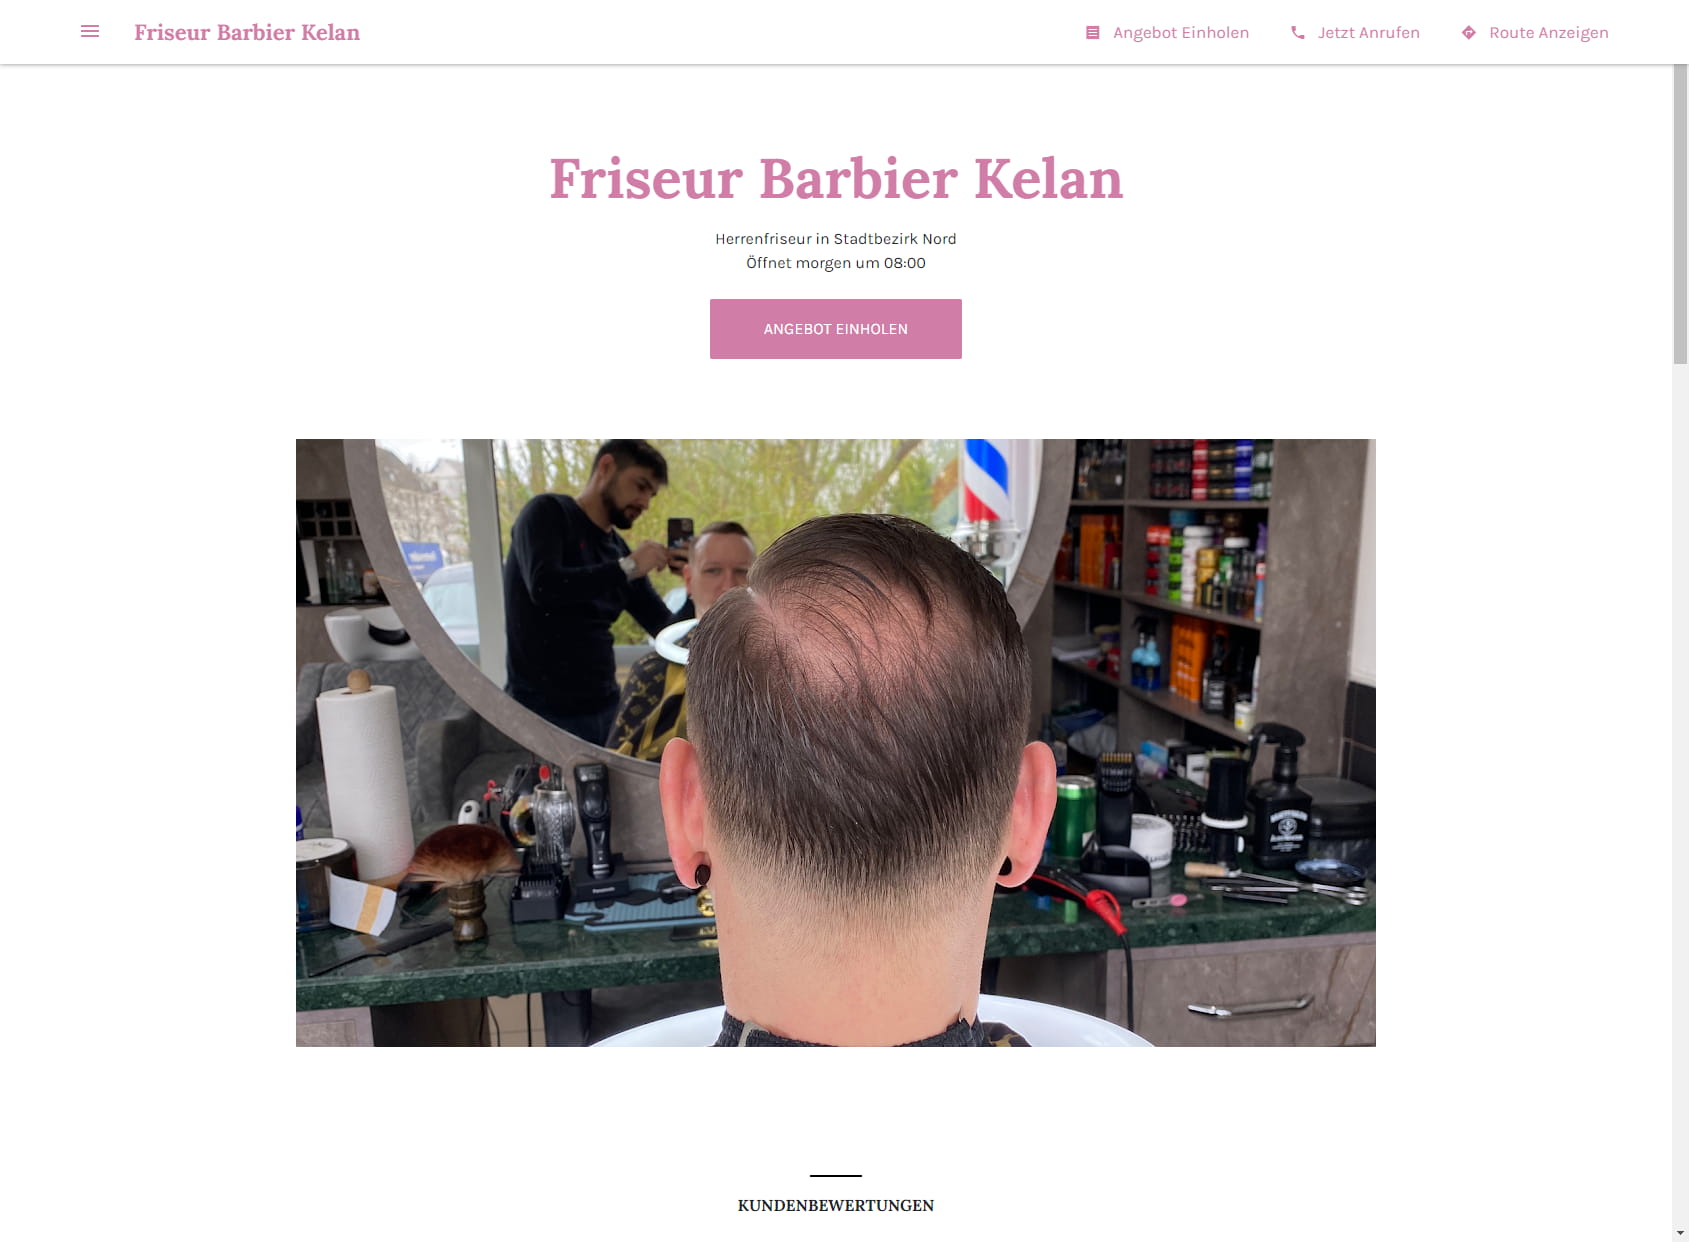 Friseur Barbier Kelan